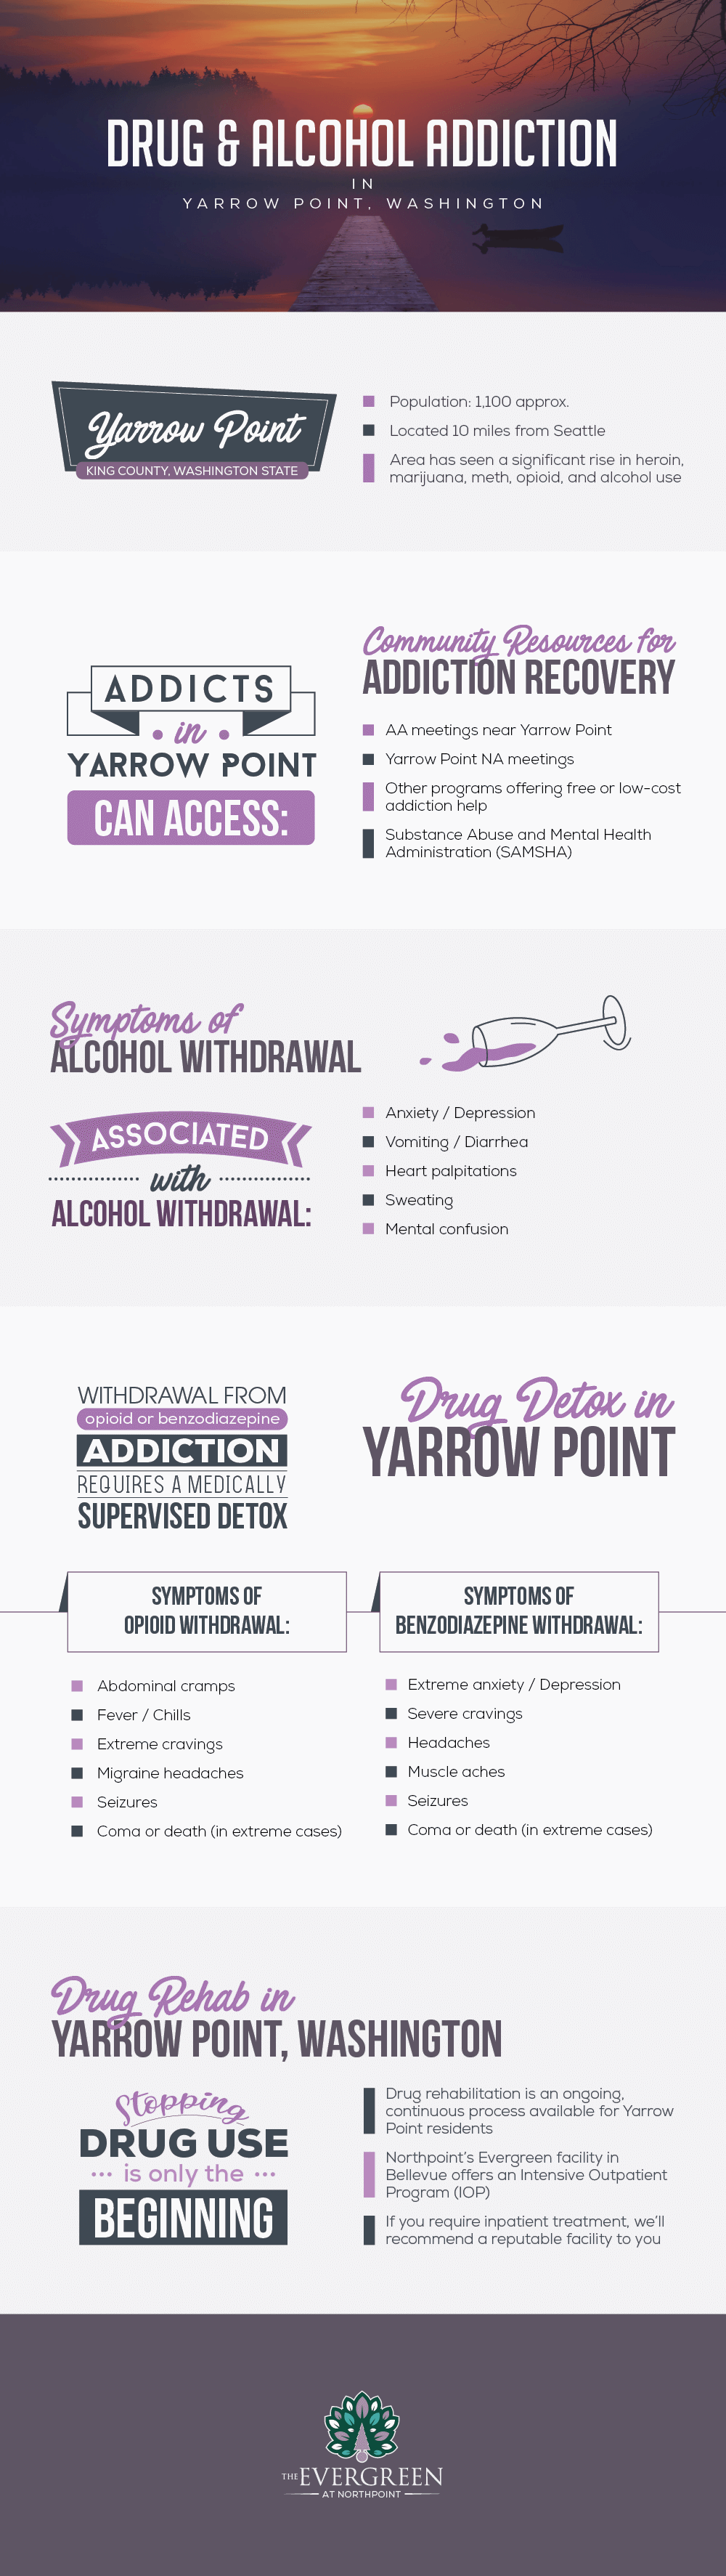 Yarrow Point Addiction Infographic